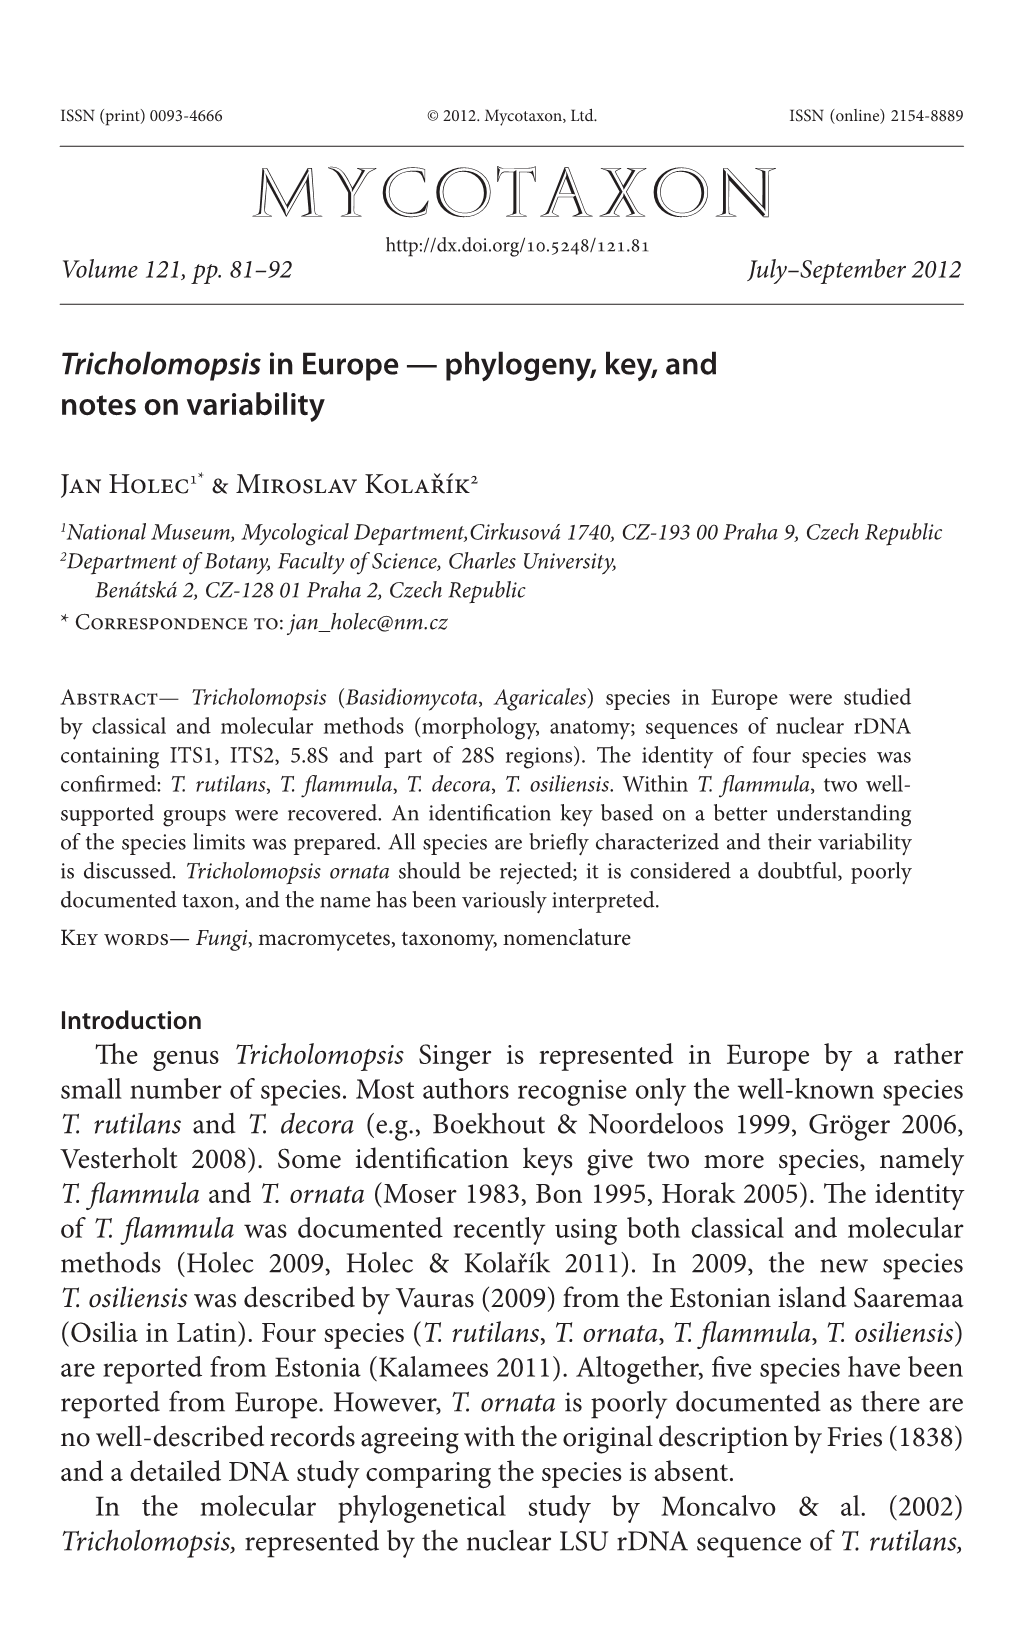 &lt;I&gt;Tricholomopsis&lt;/I&gt; in Europe ÂŠ Phylogeny, Key, and Notes on Variability